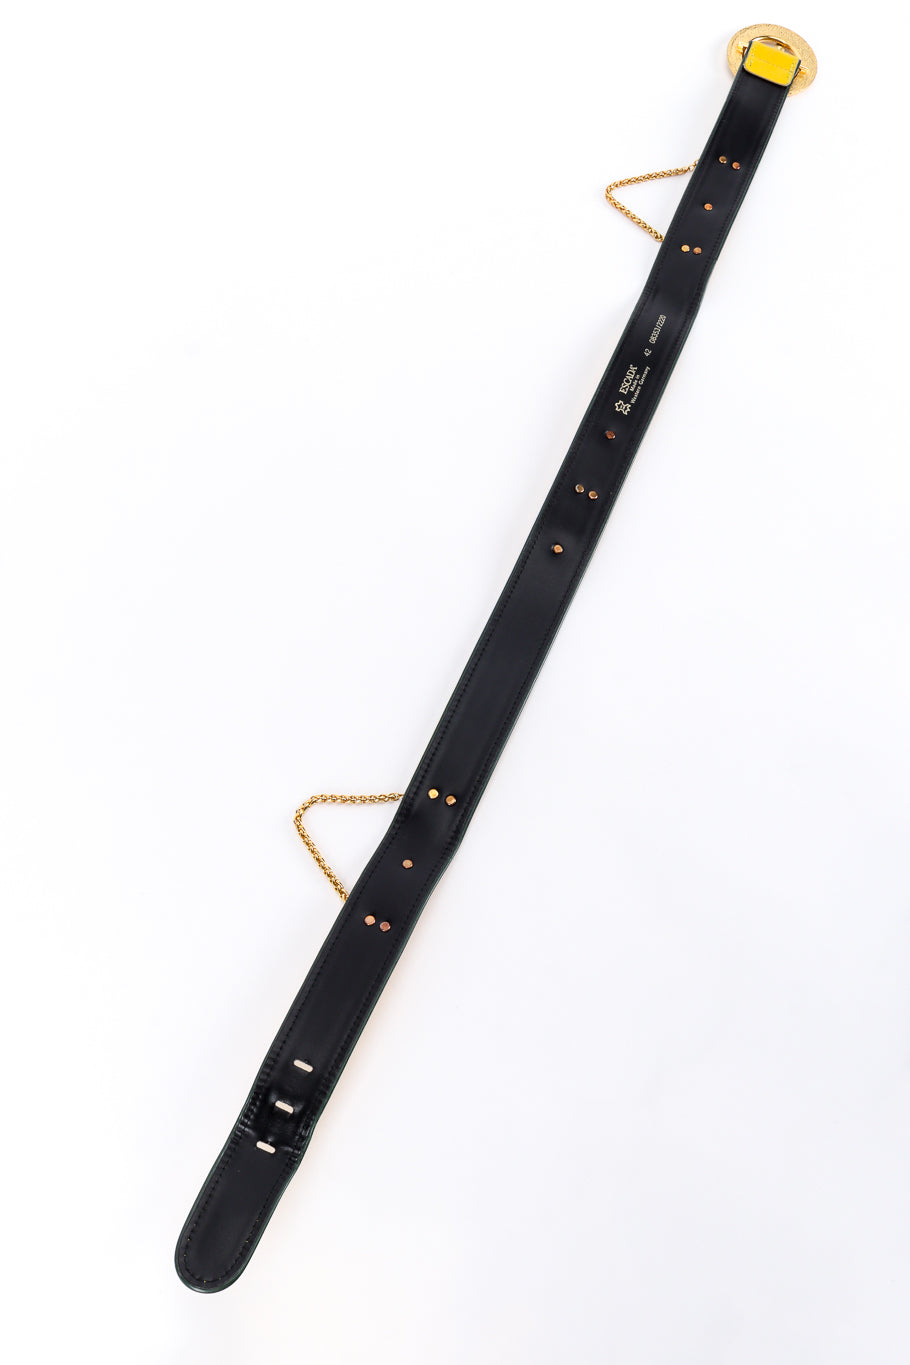 Vintage Escada Roman Clock Leather Belt II back fully extended @recess la